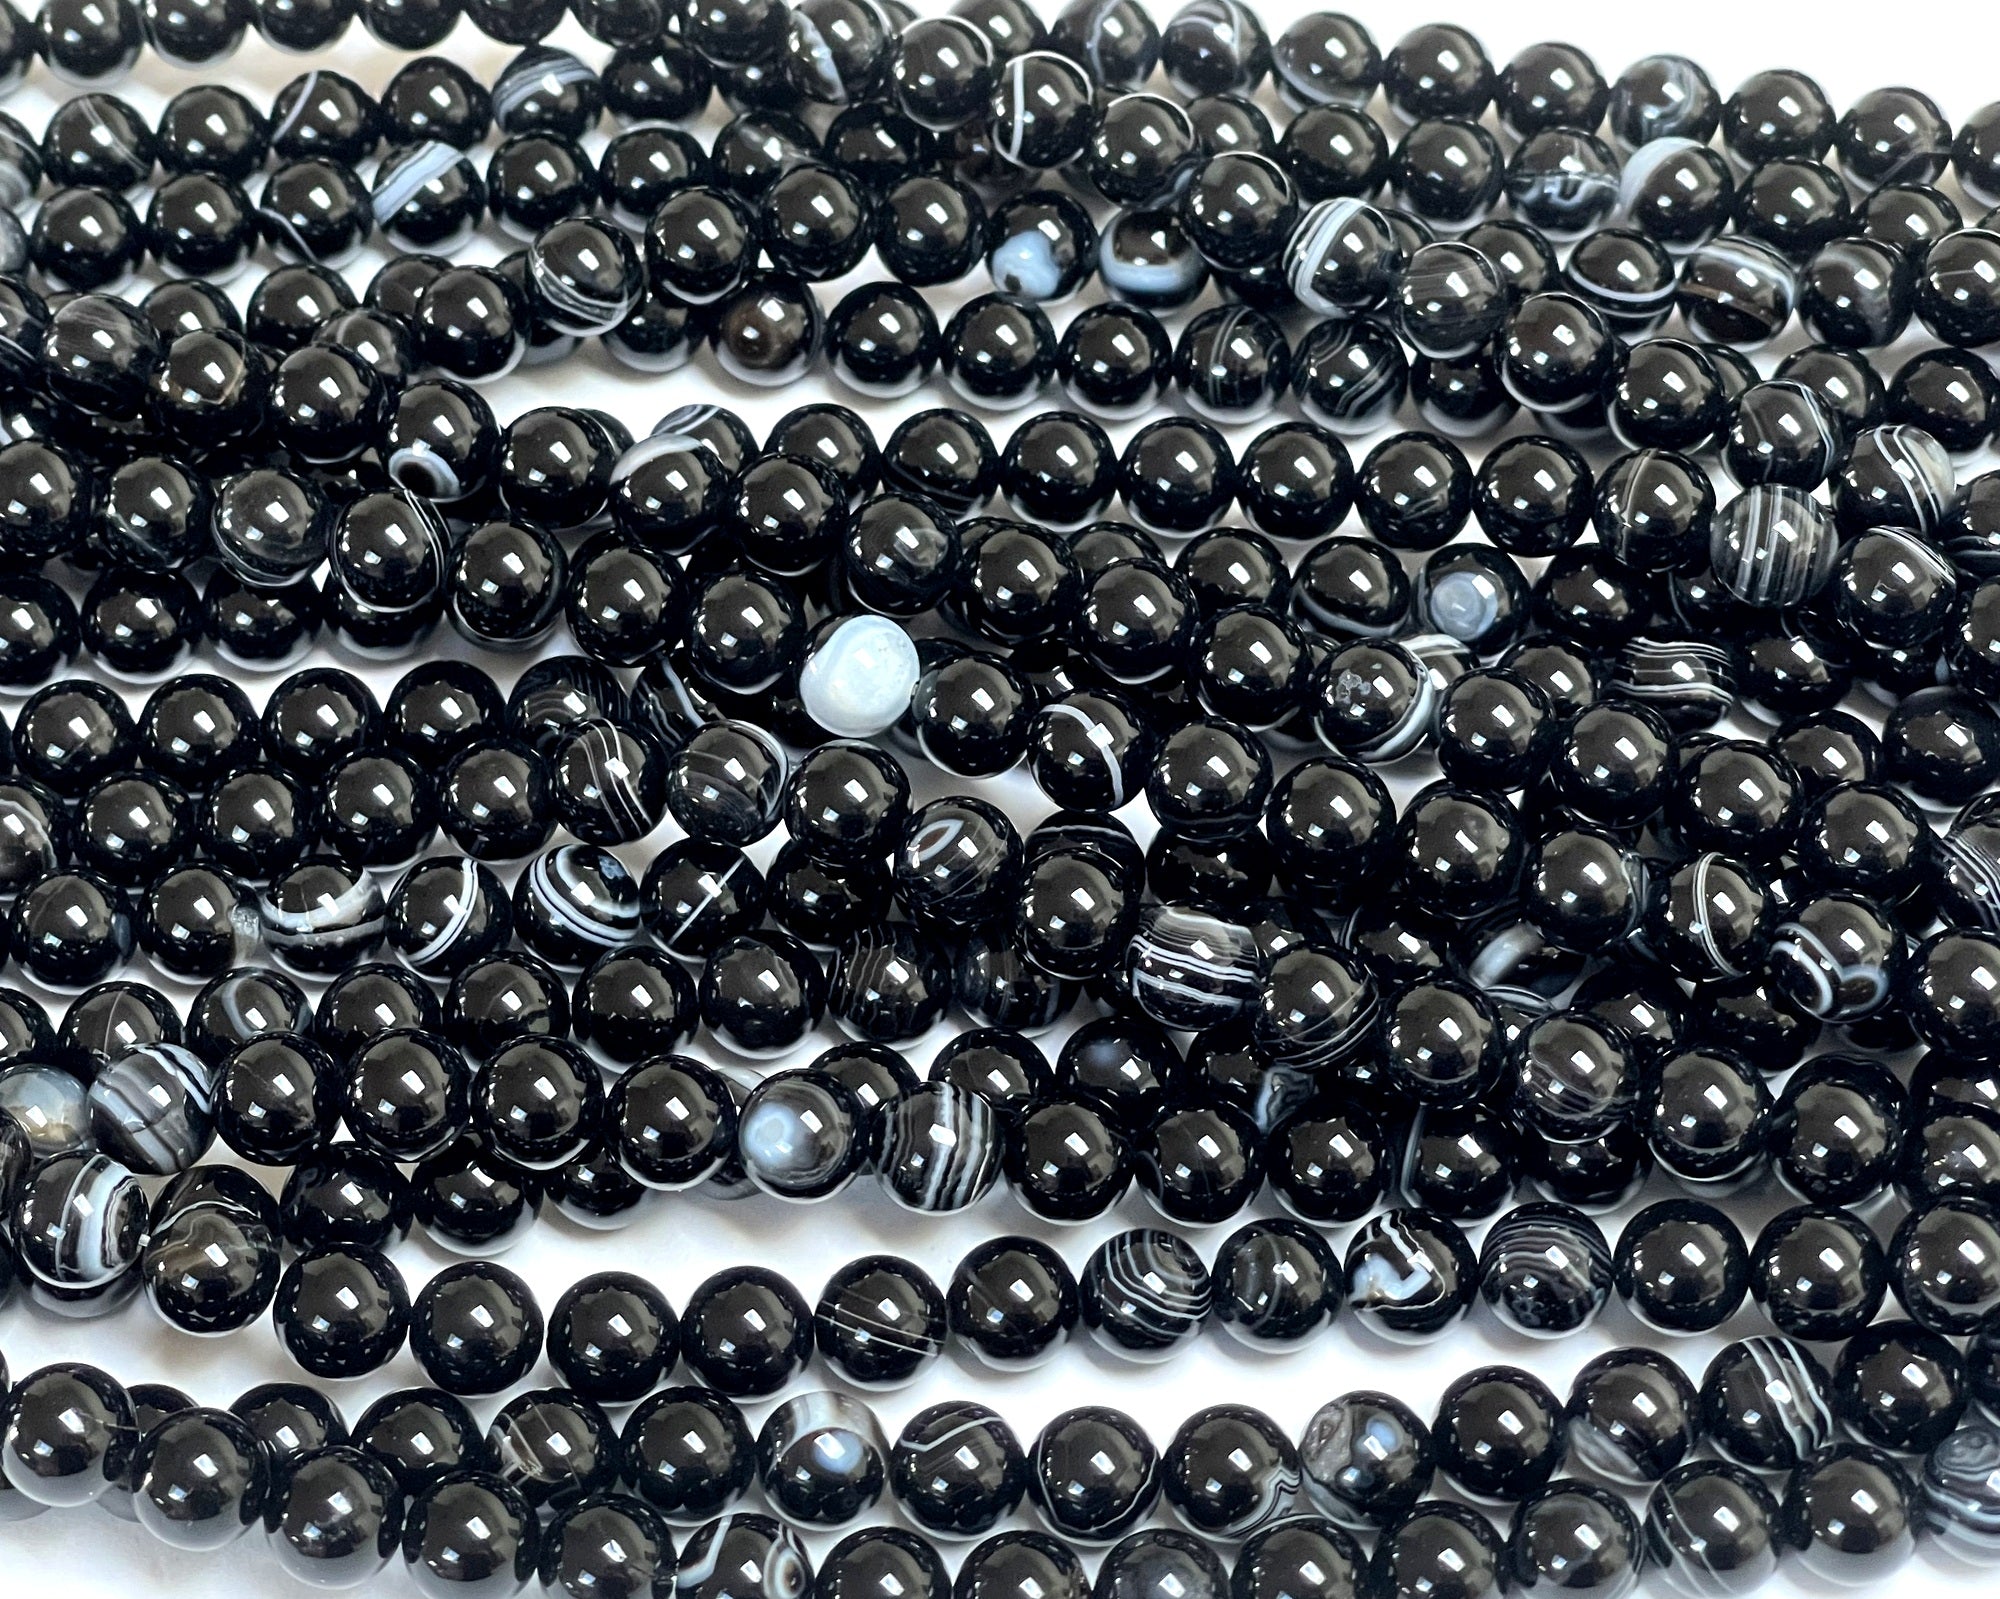 Black Banded Agate 8mm round gemstone beads 15" strand